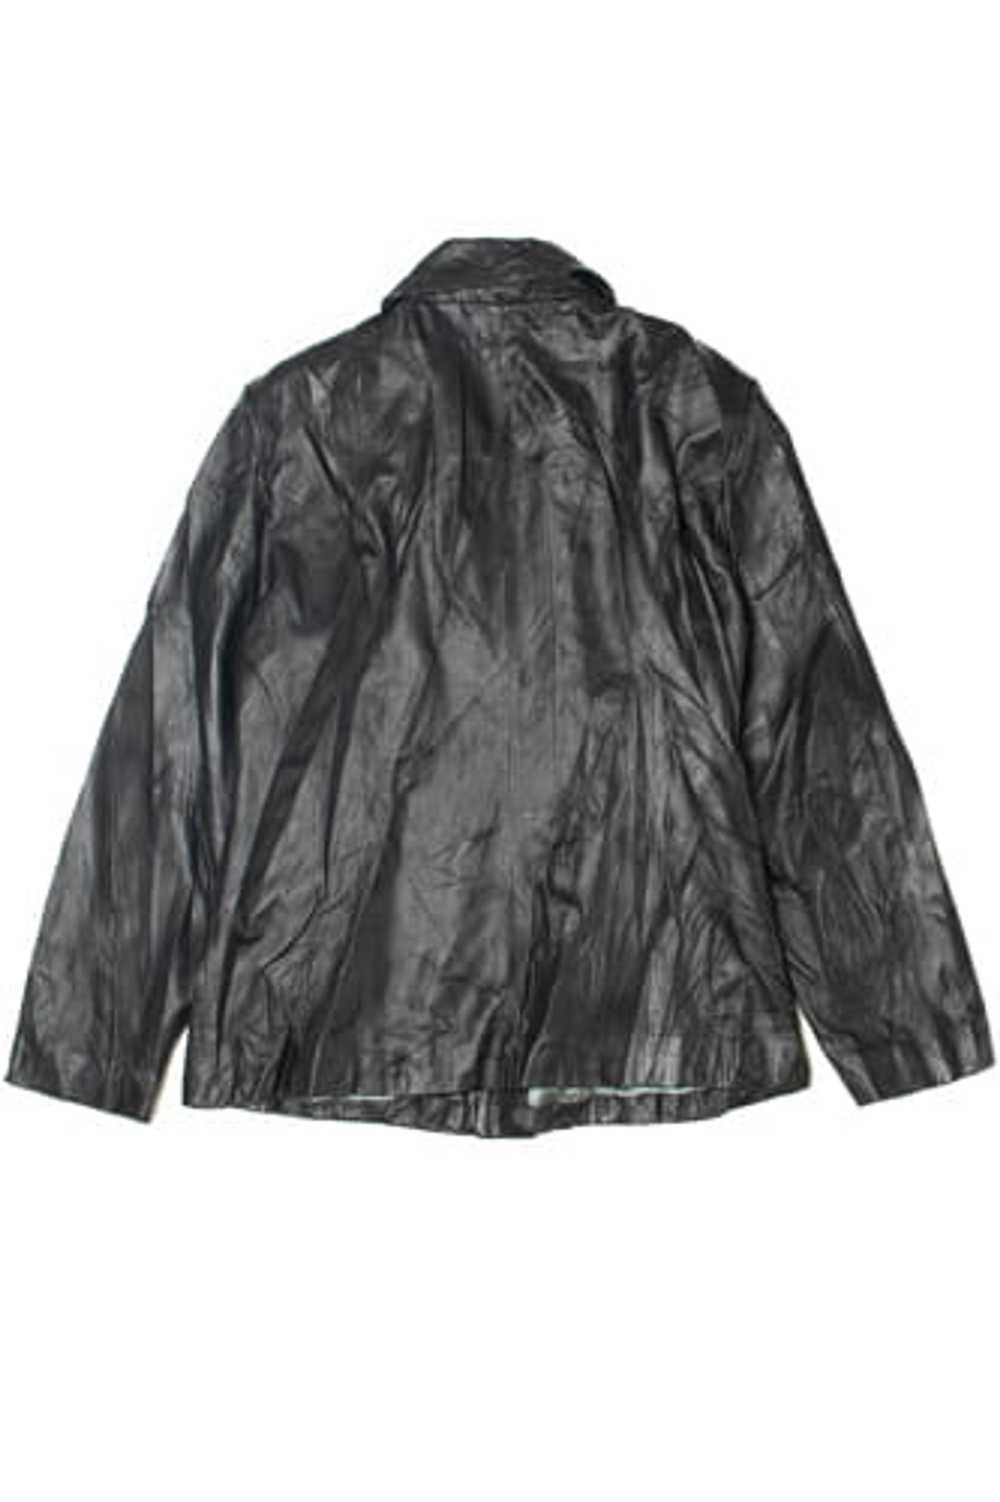 Vintage Lambskin Jacqueline Ferrar Leather Jacket - image 2